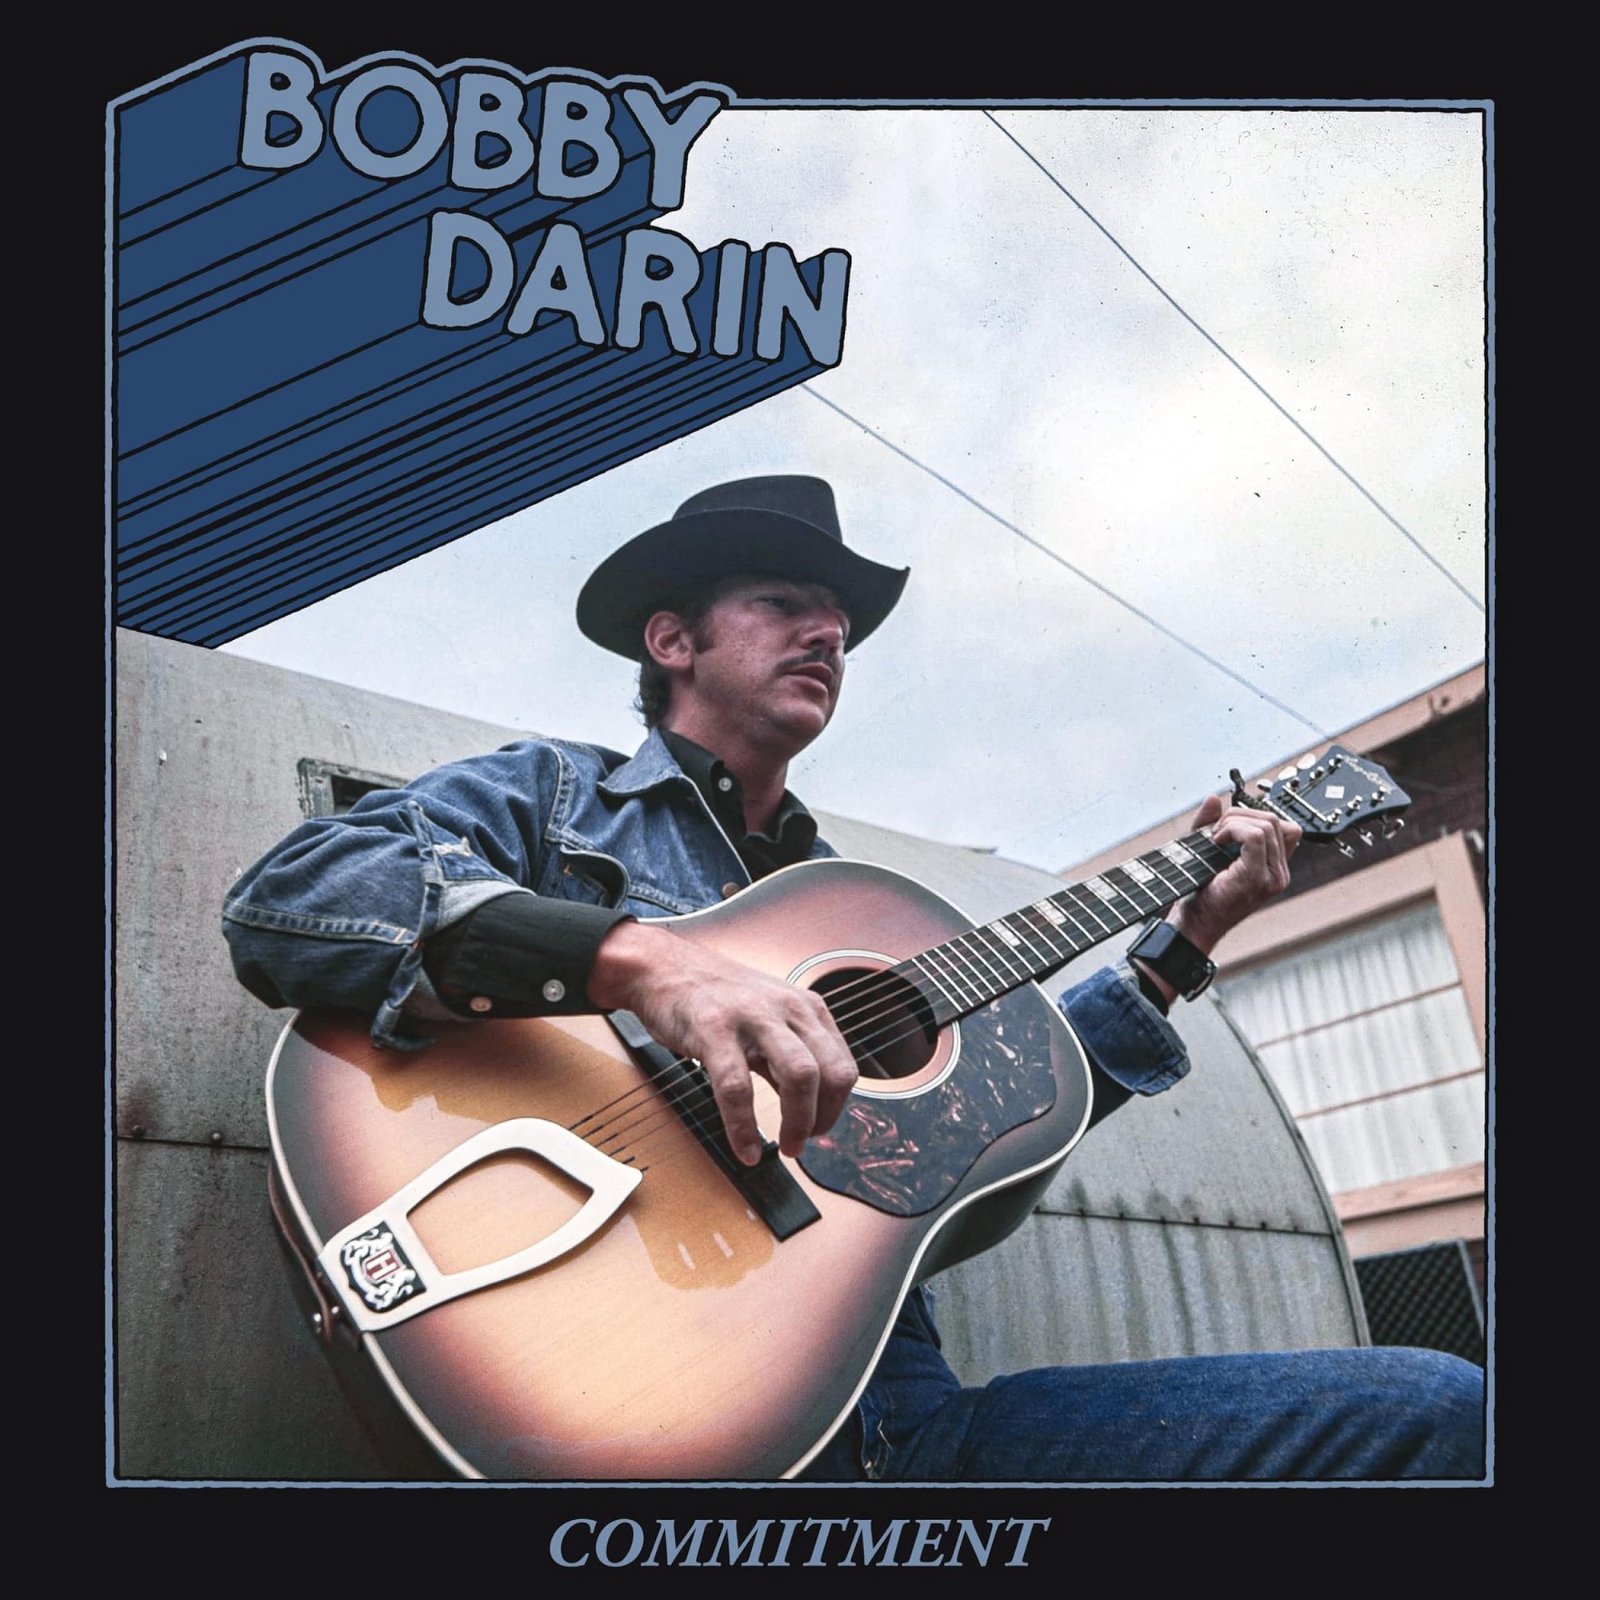 CD Shop - DARIN, BOBBY COMMITMENT